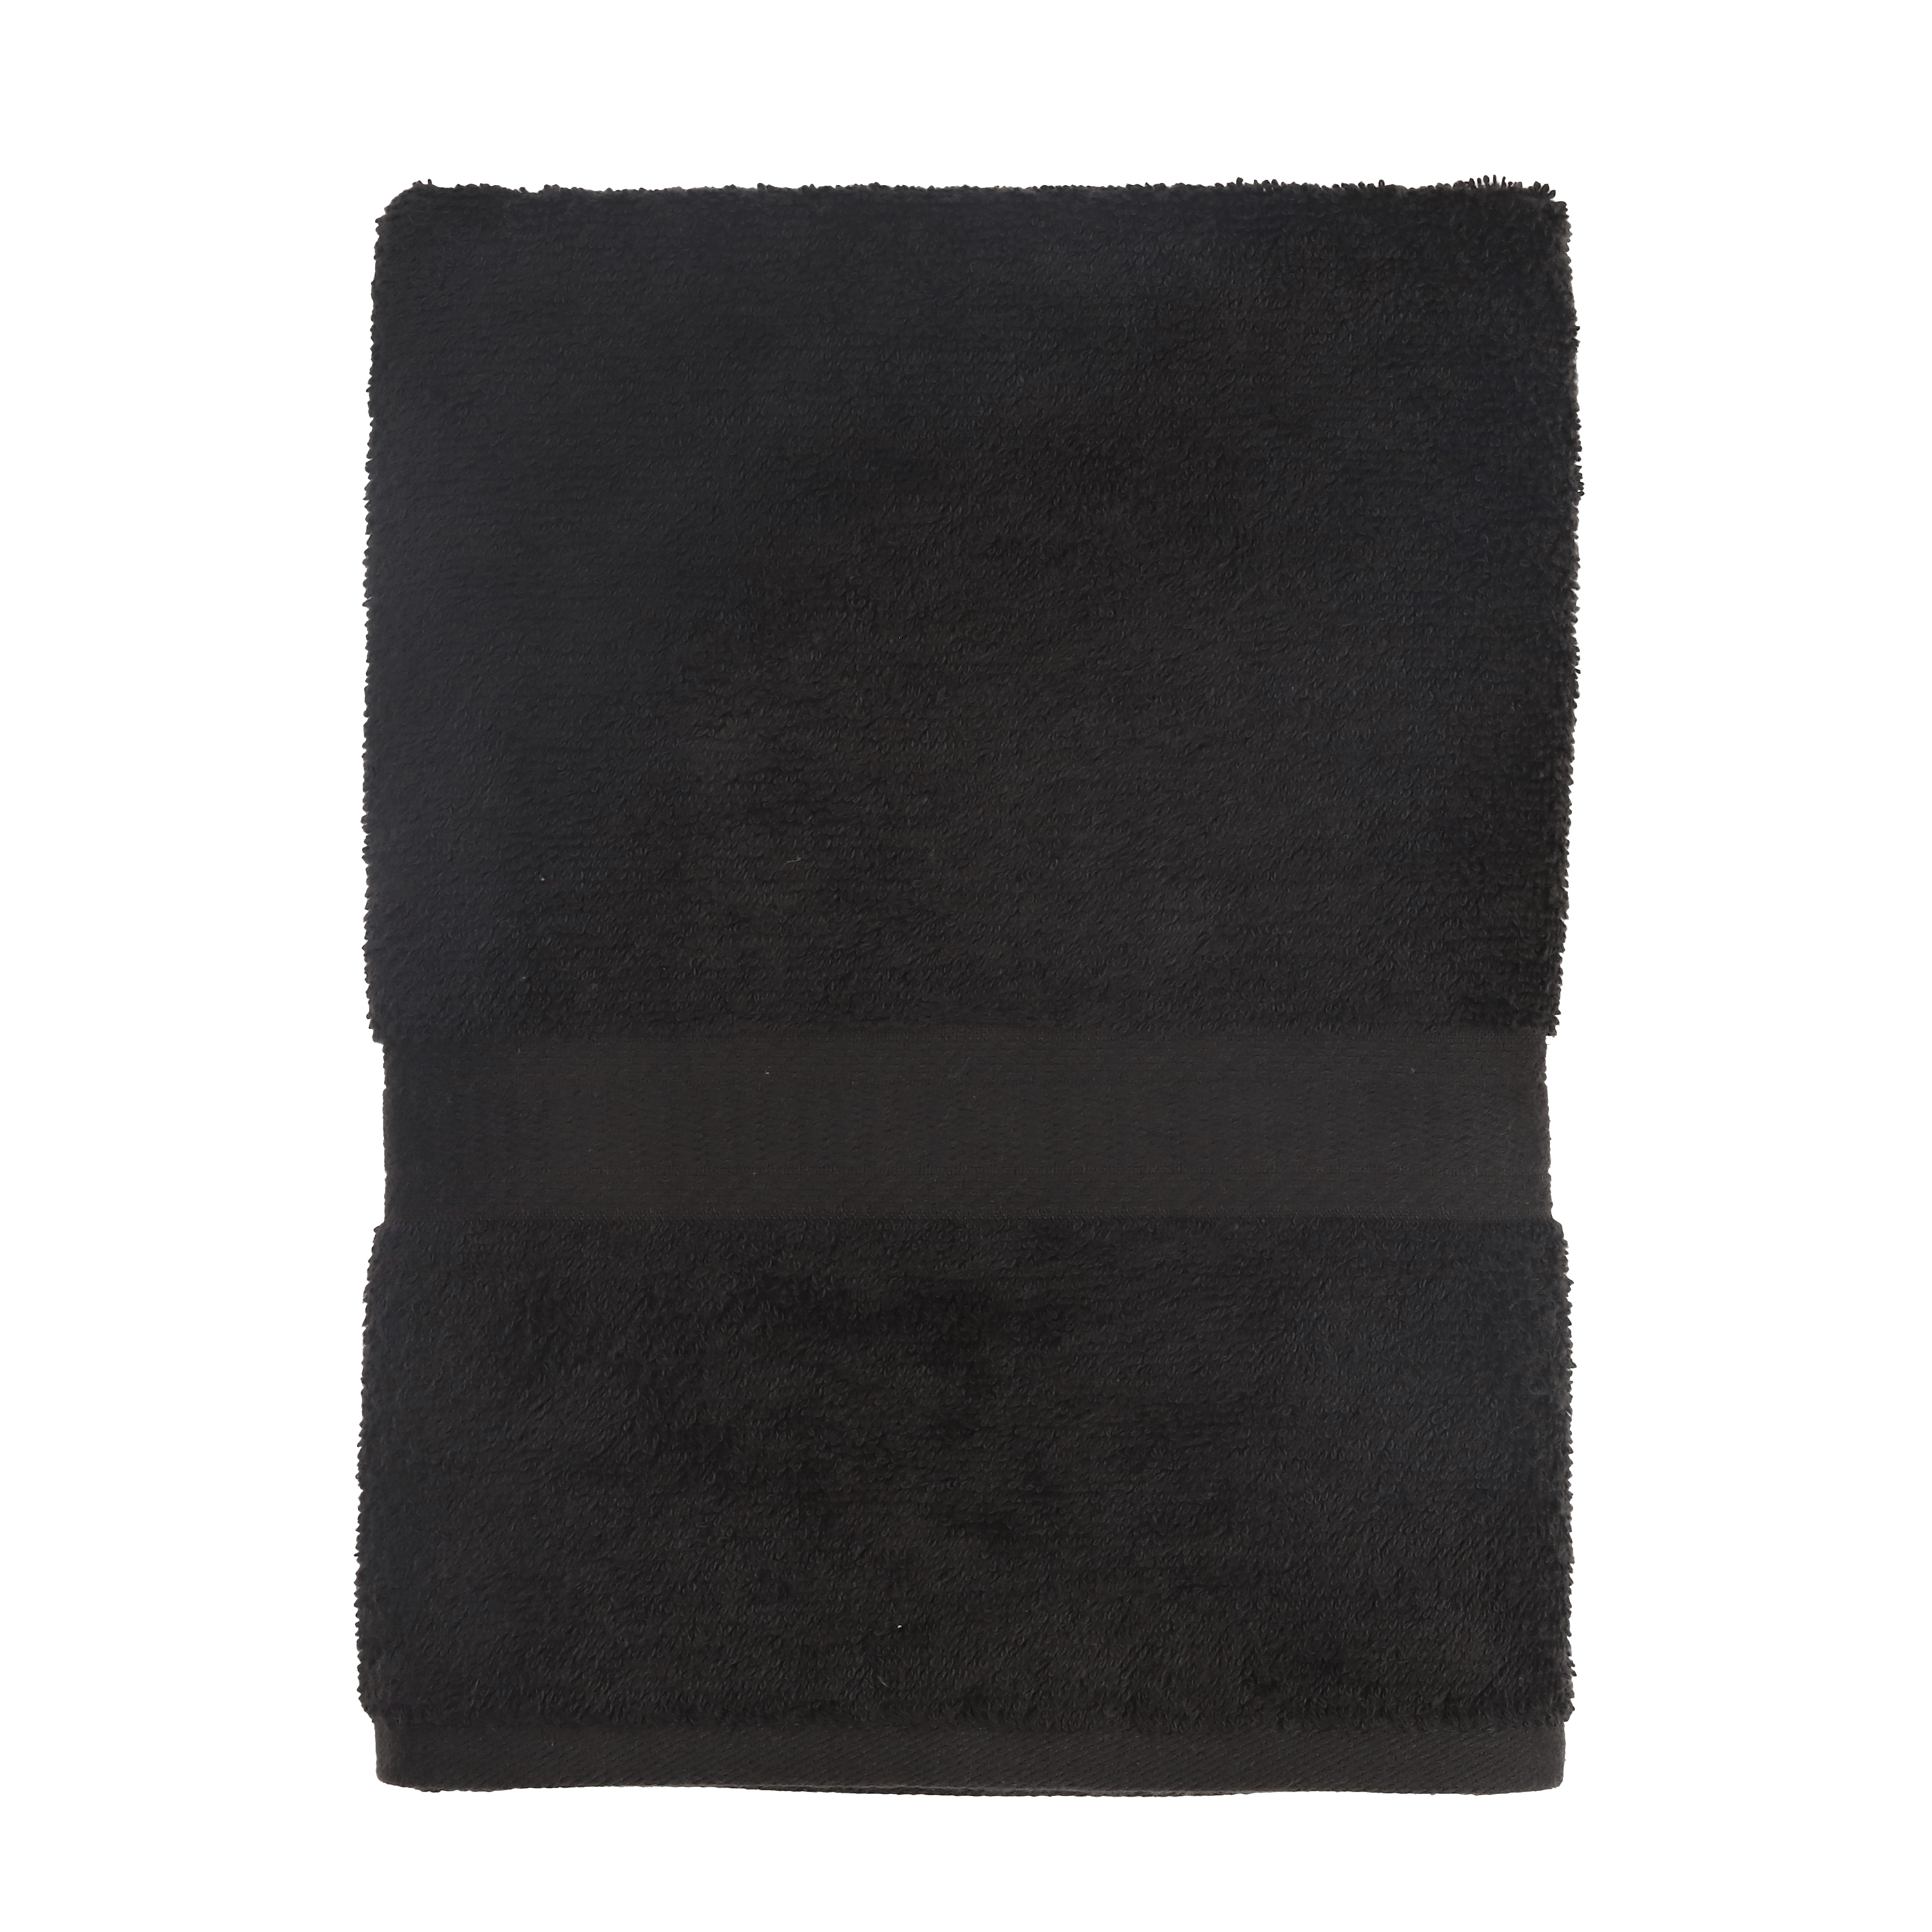 Mainstays Solid Bath Towel, Rich Black - image 1 of 9